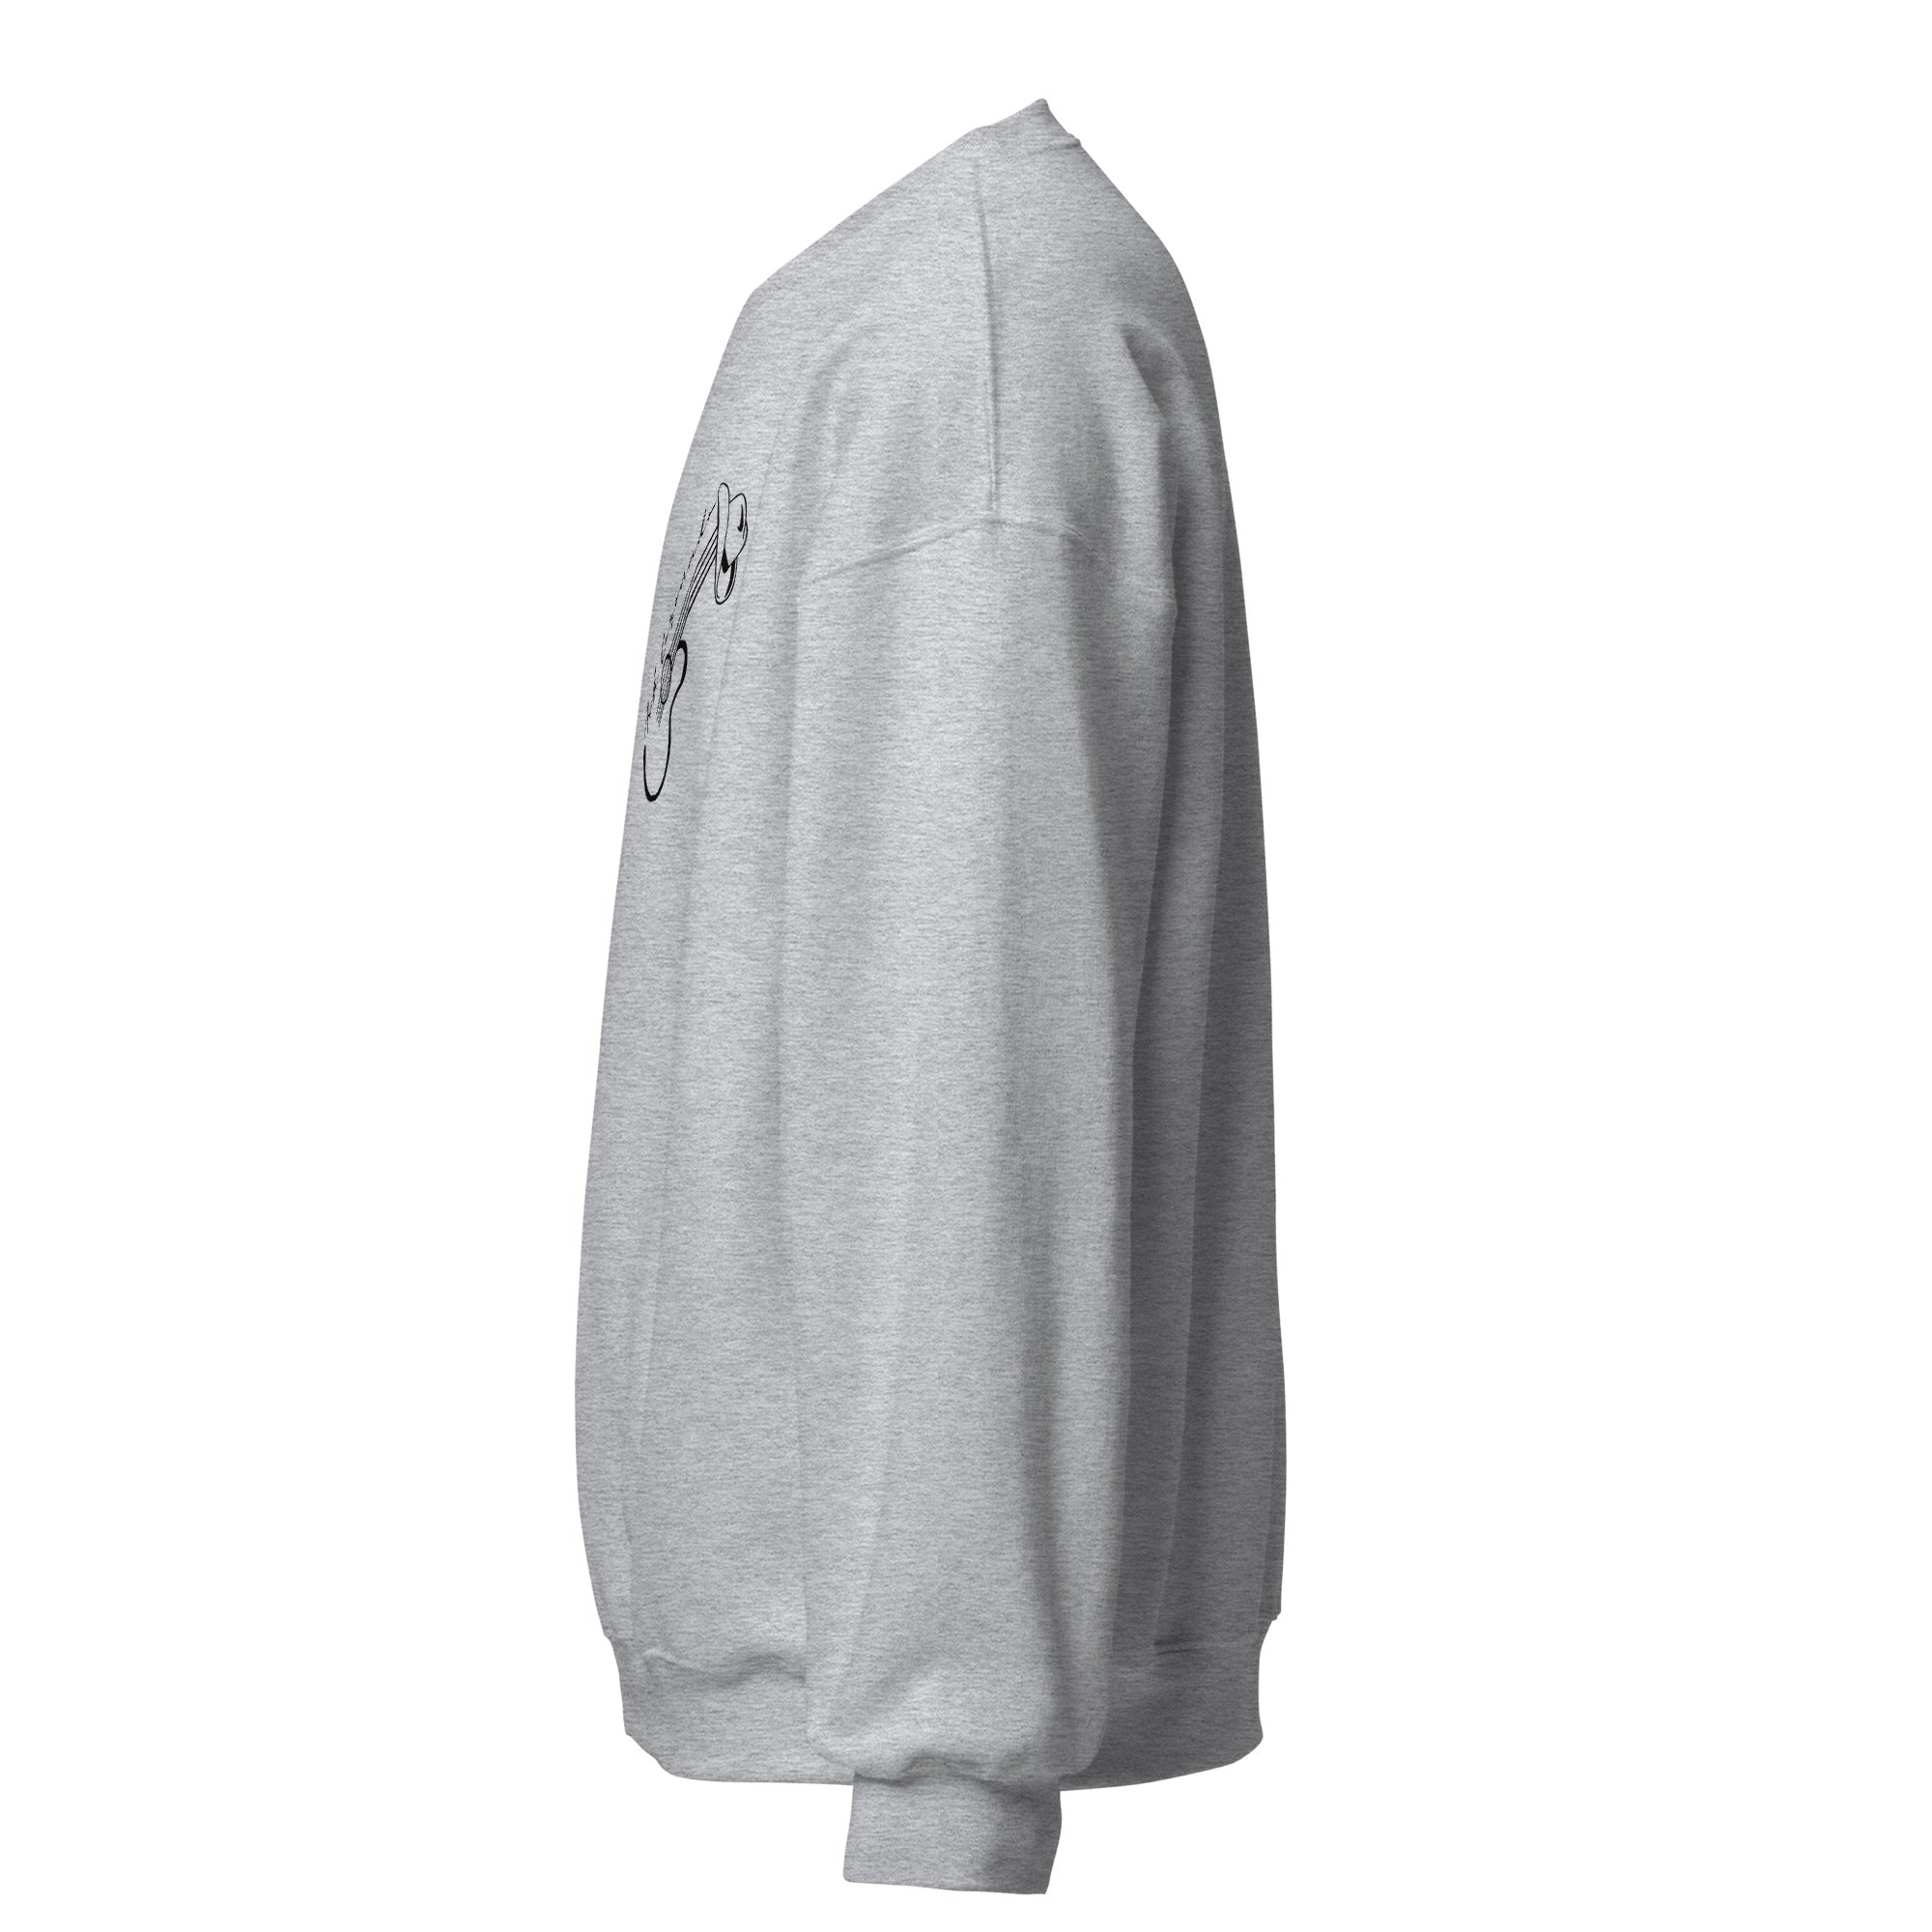 Ash Coronado - Unisex Sweatshirt